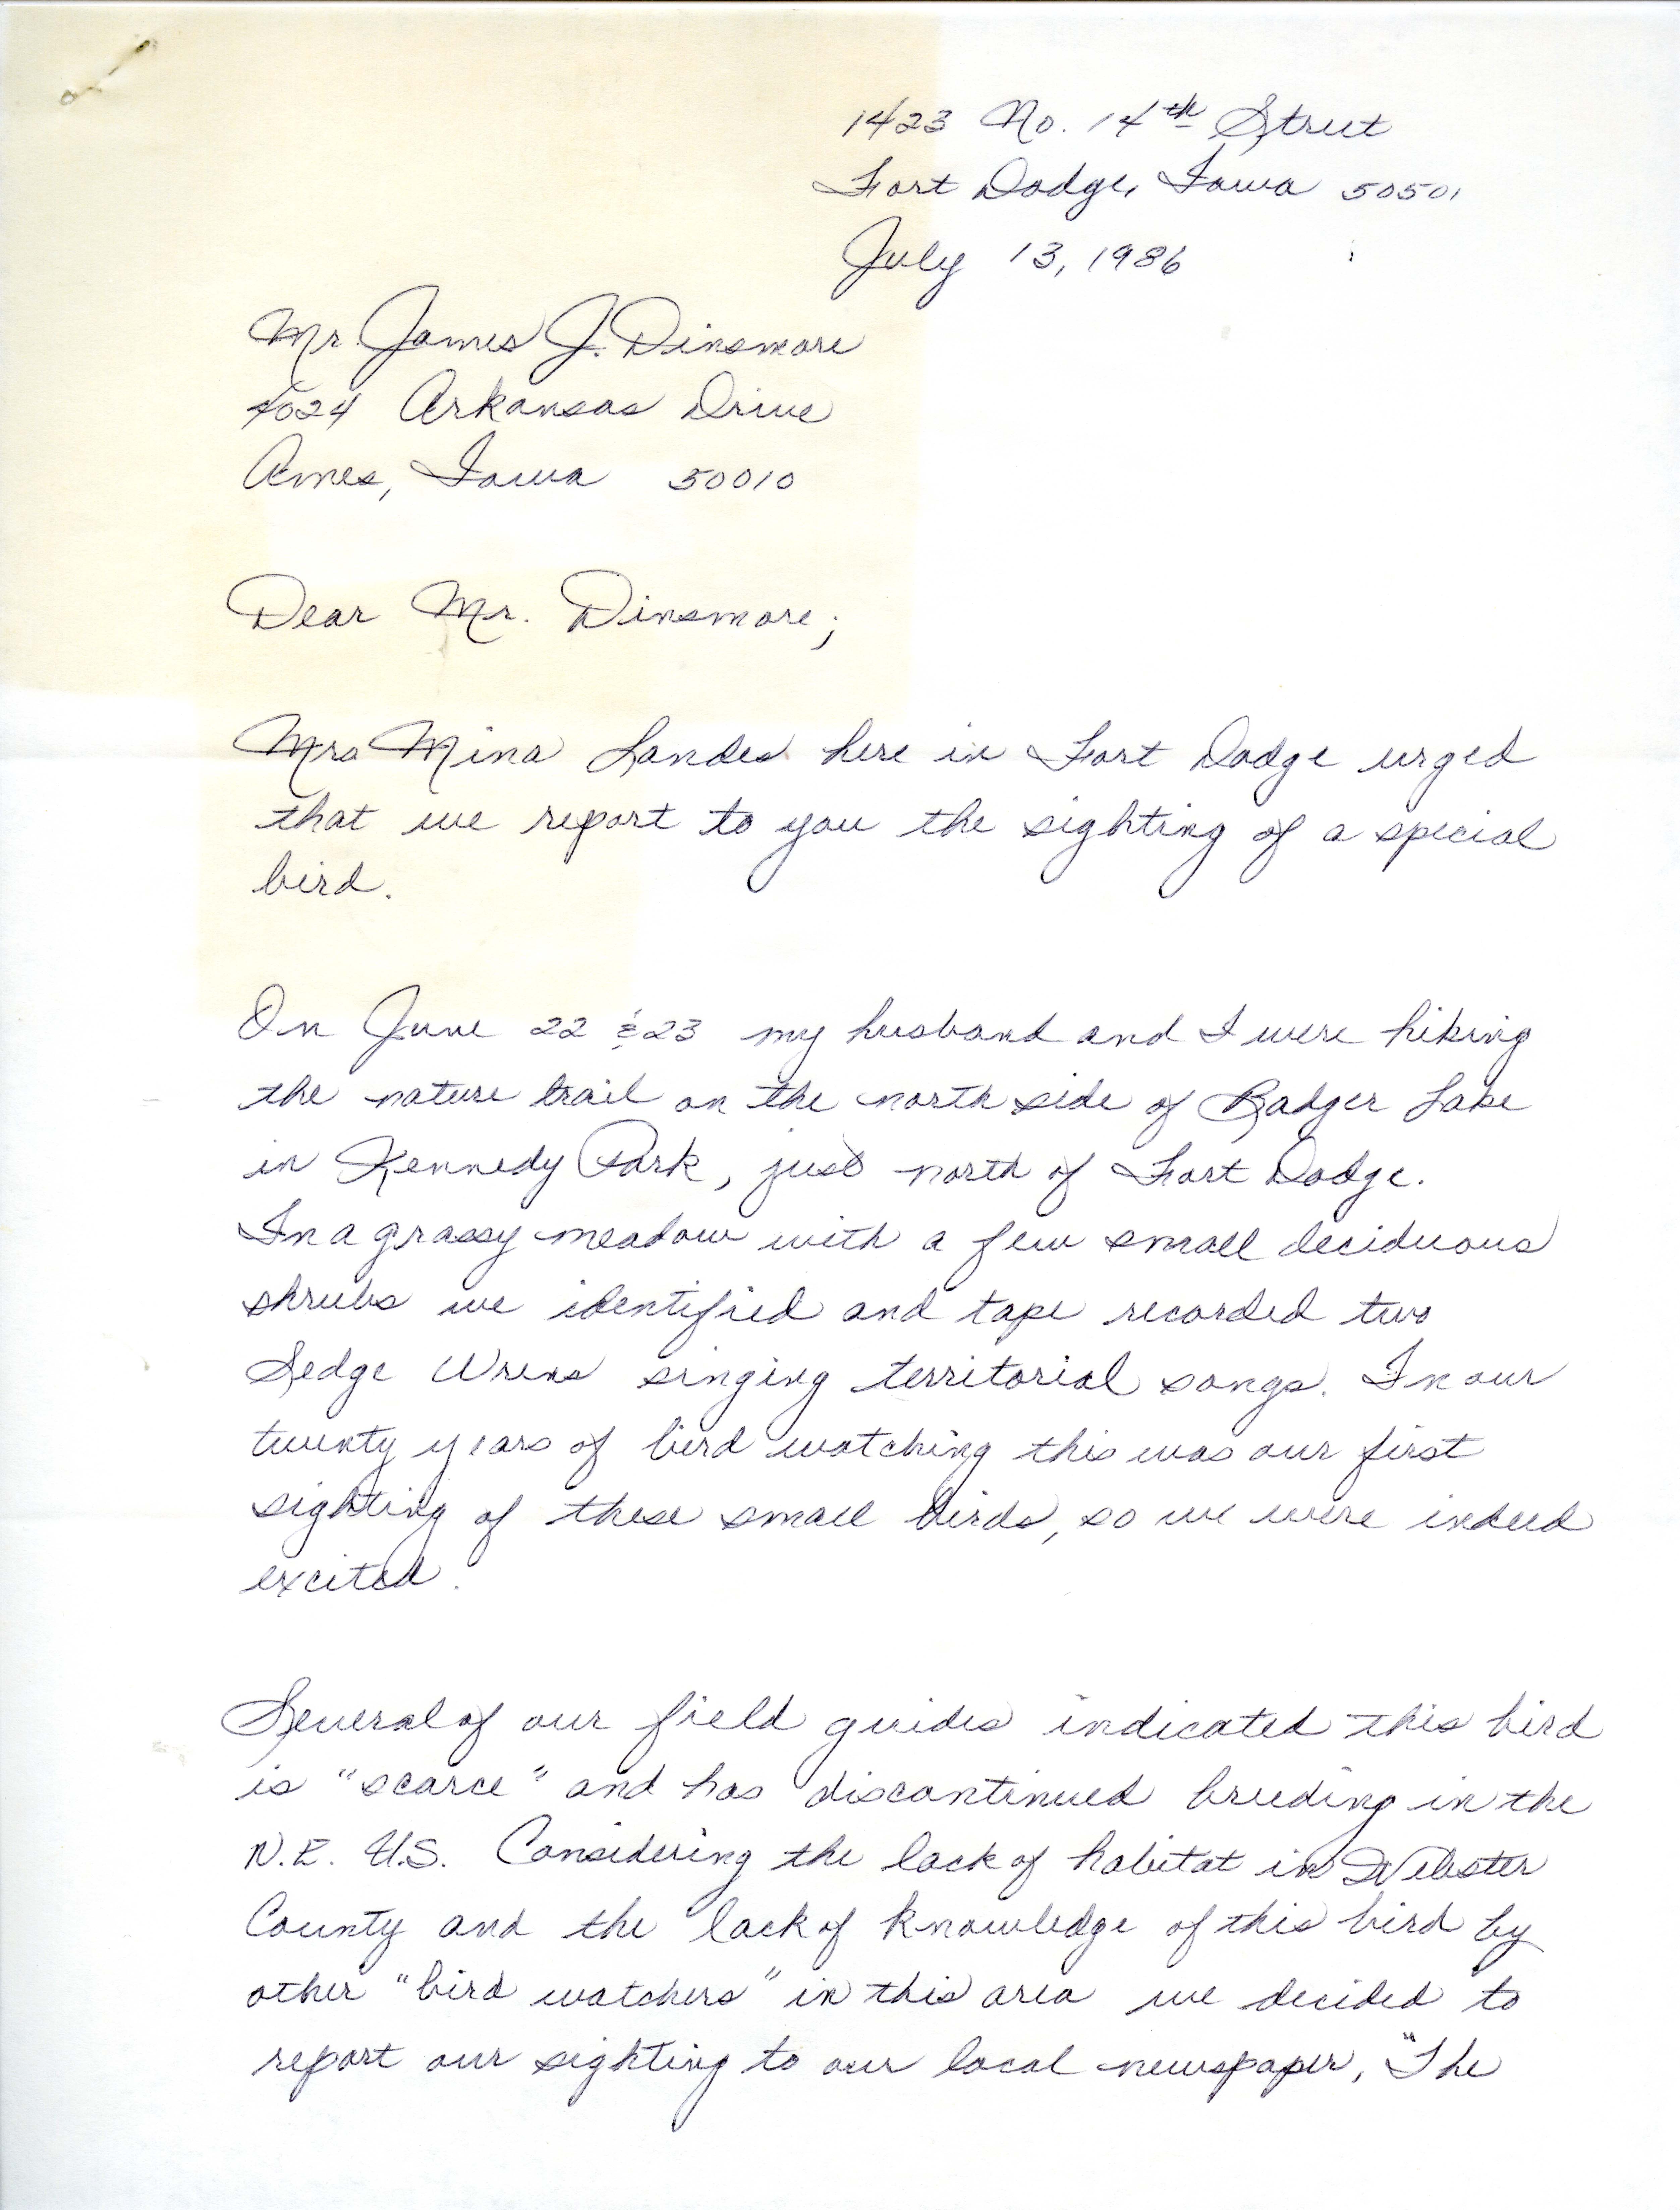 Jan Schamel letter to James J. Dinsmore regarding a Sedge Wren sighting, July 13, 1986